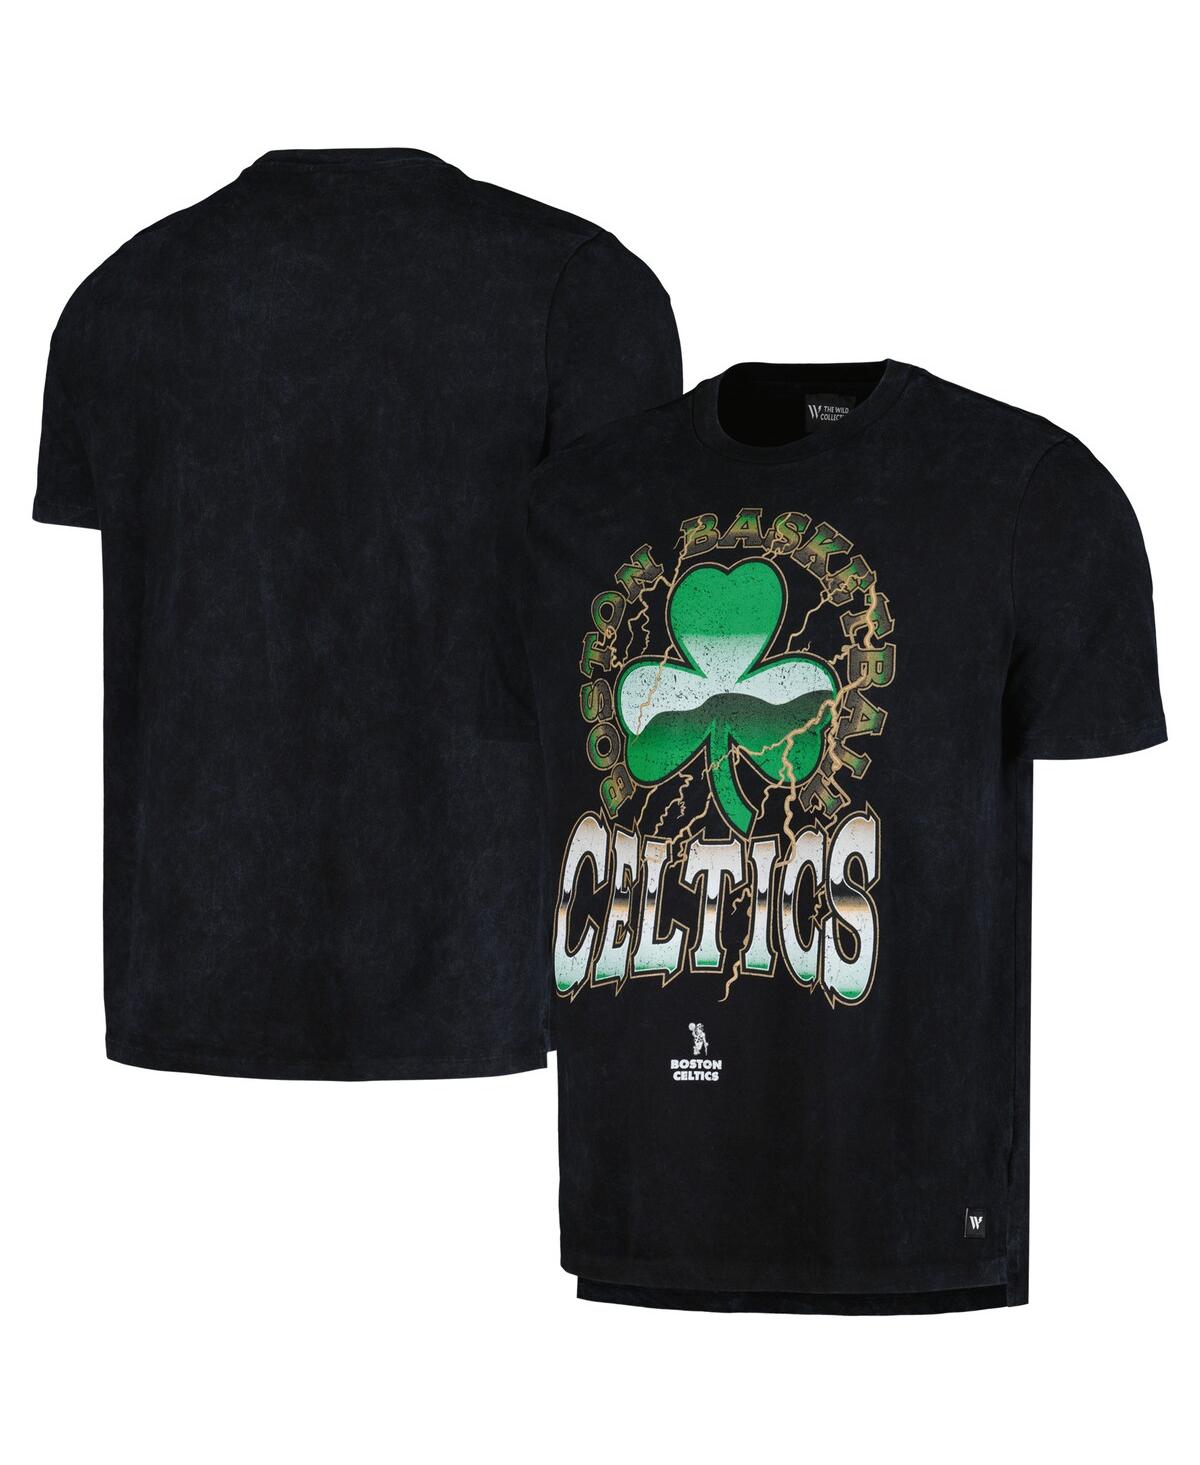 Shop The Wild Collective Men's And Women's  Black Distressed Boston Celtics Tour Band T-shirt